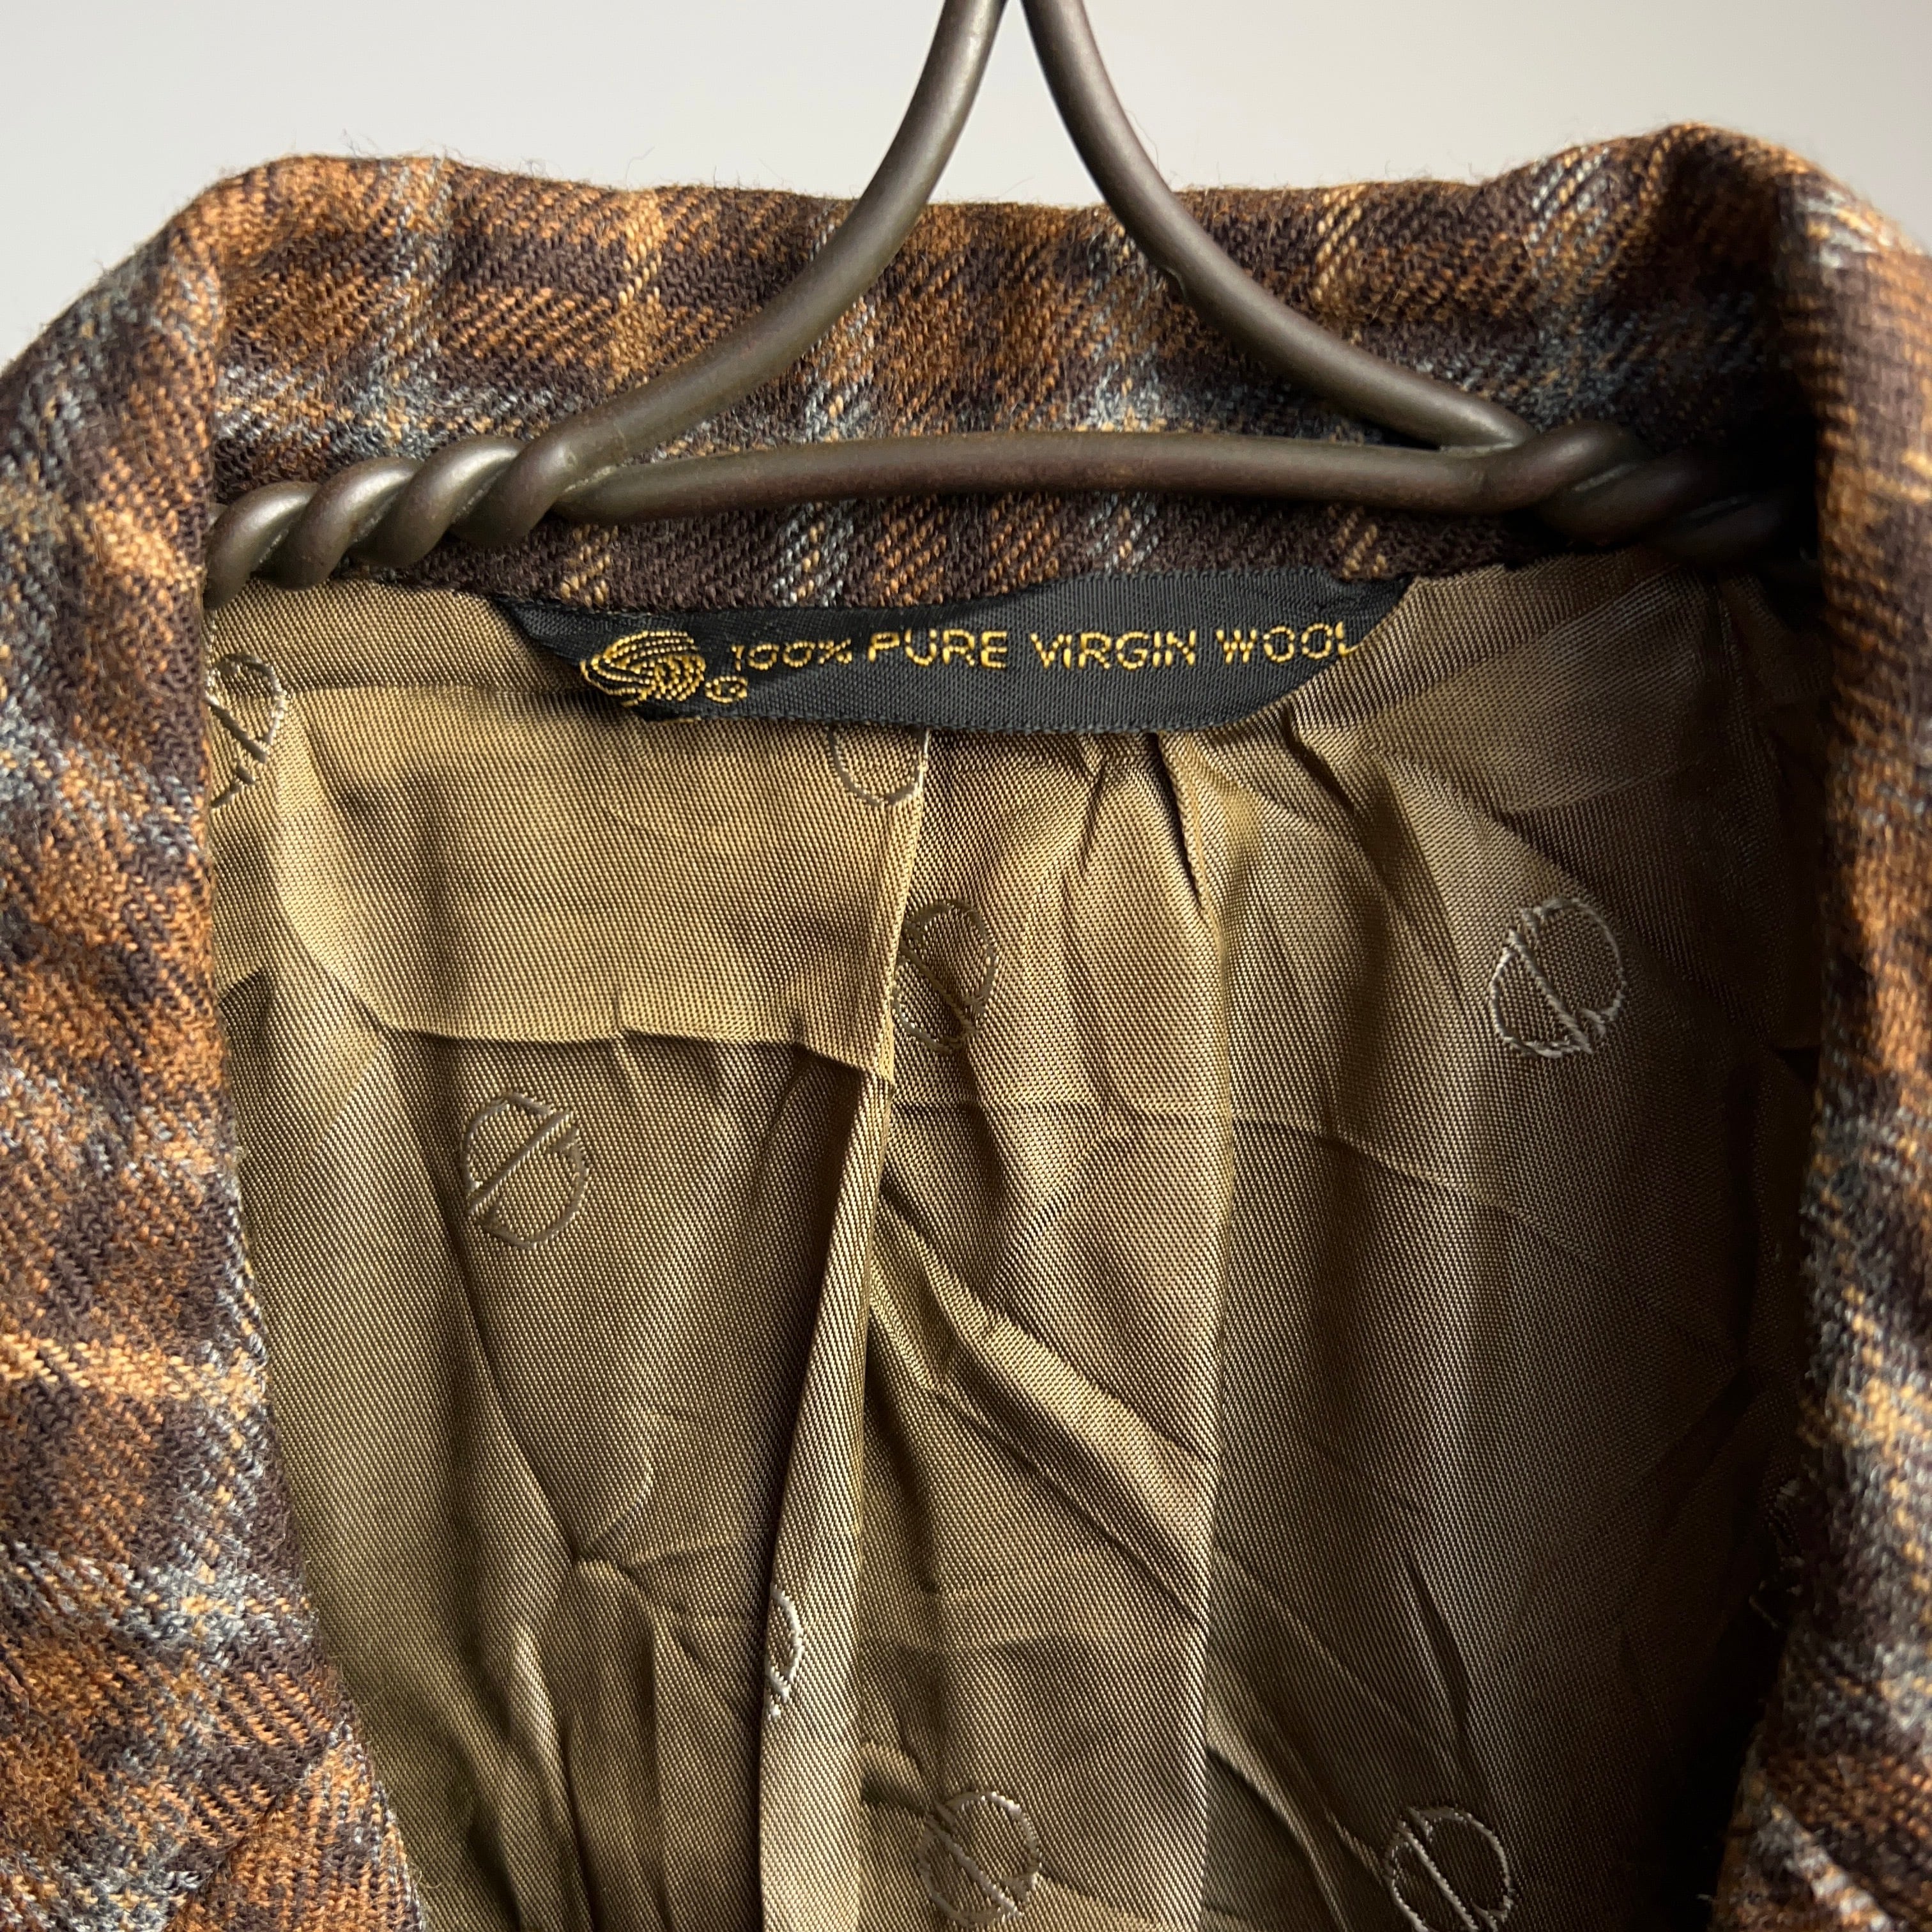 70's~80's “Christian Dior” Plaid Wool Tailored Jacket ディオール